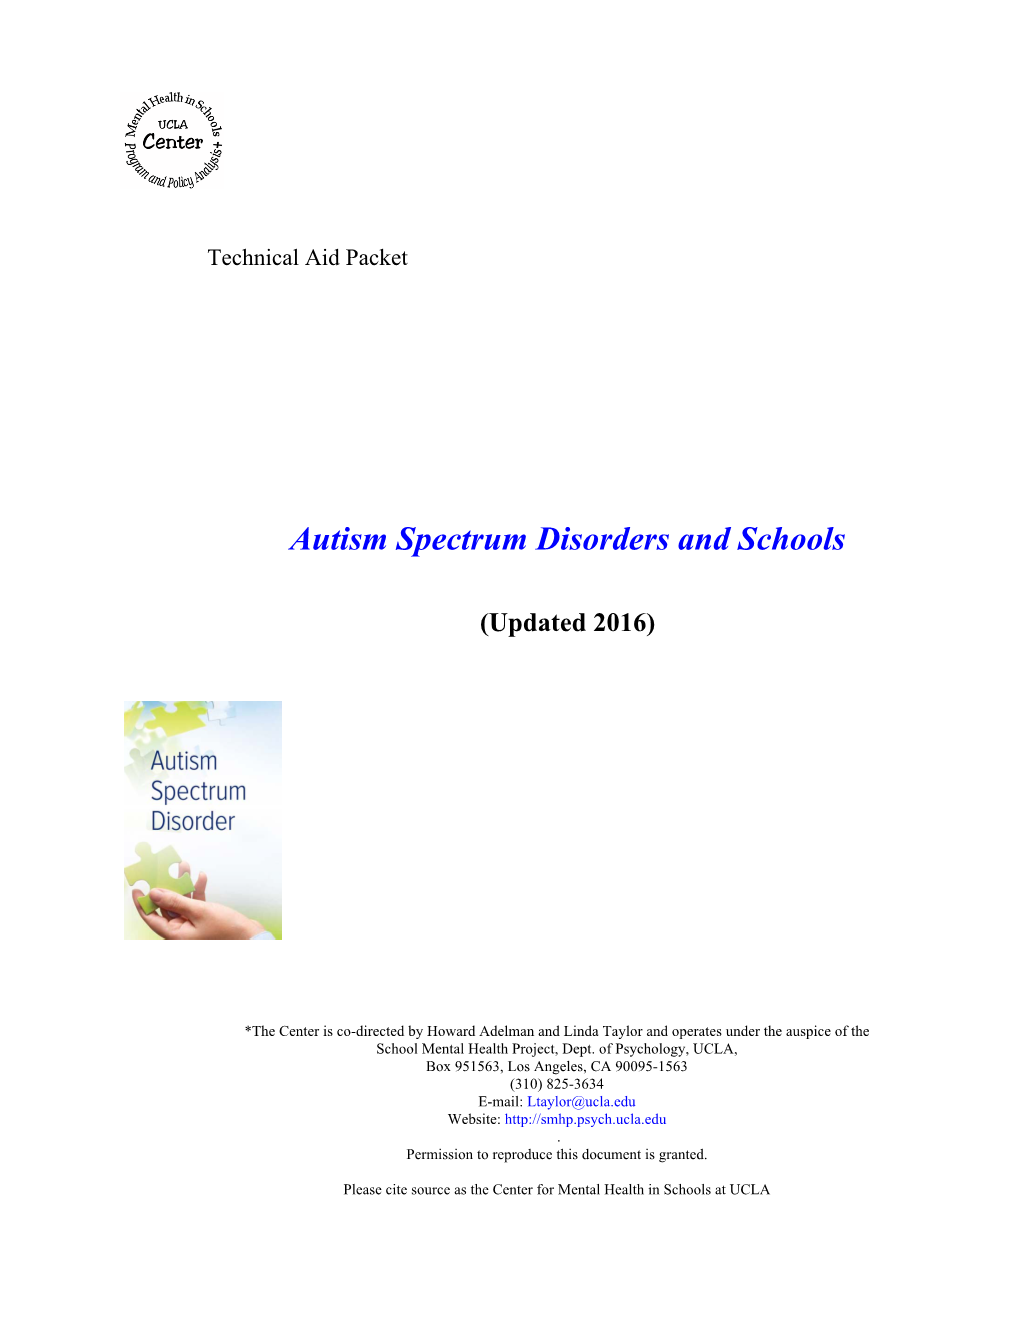 Autism Spectrum Disorders and Schools